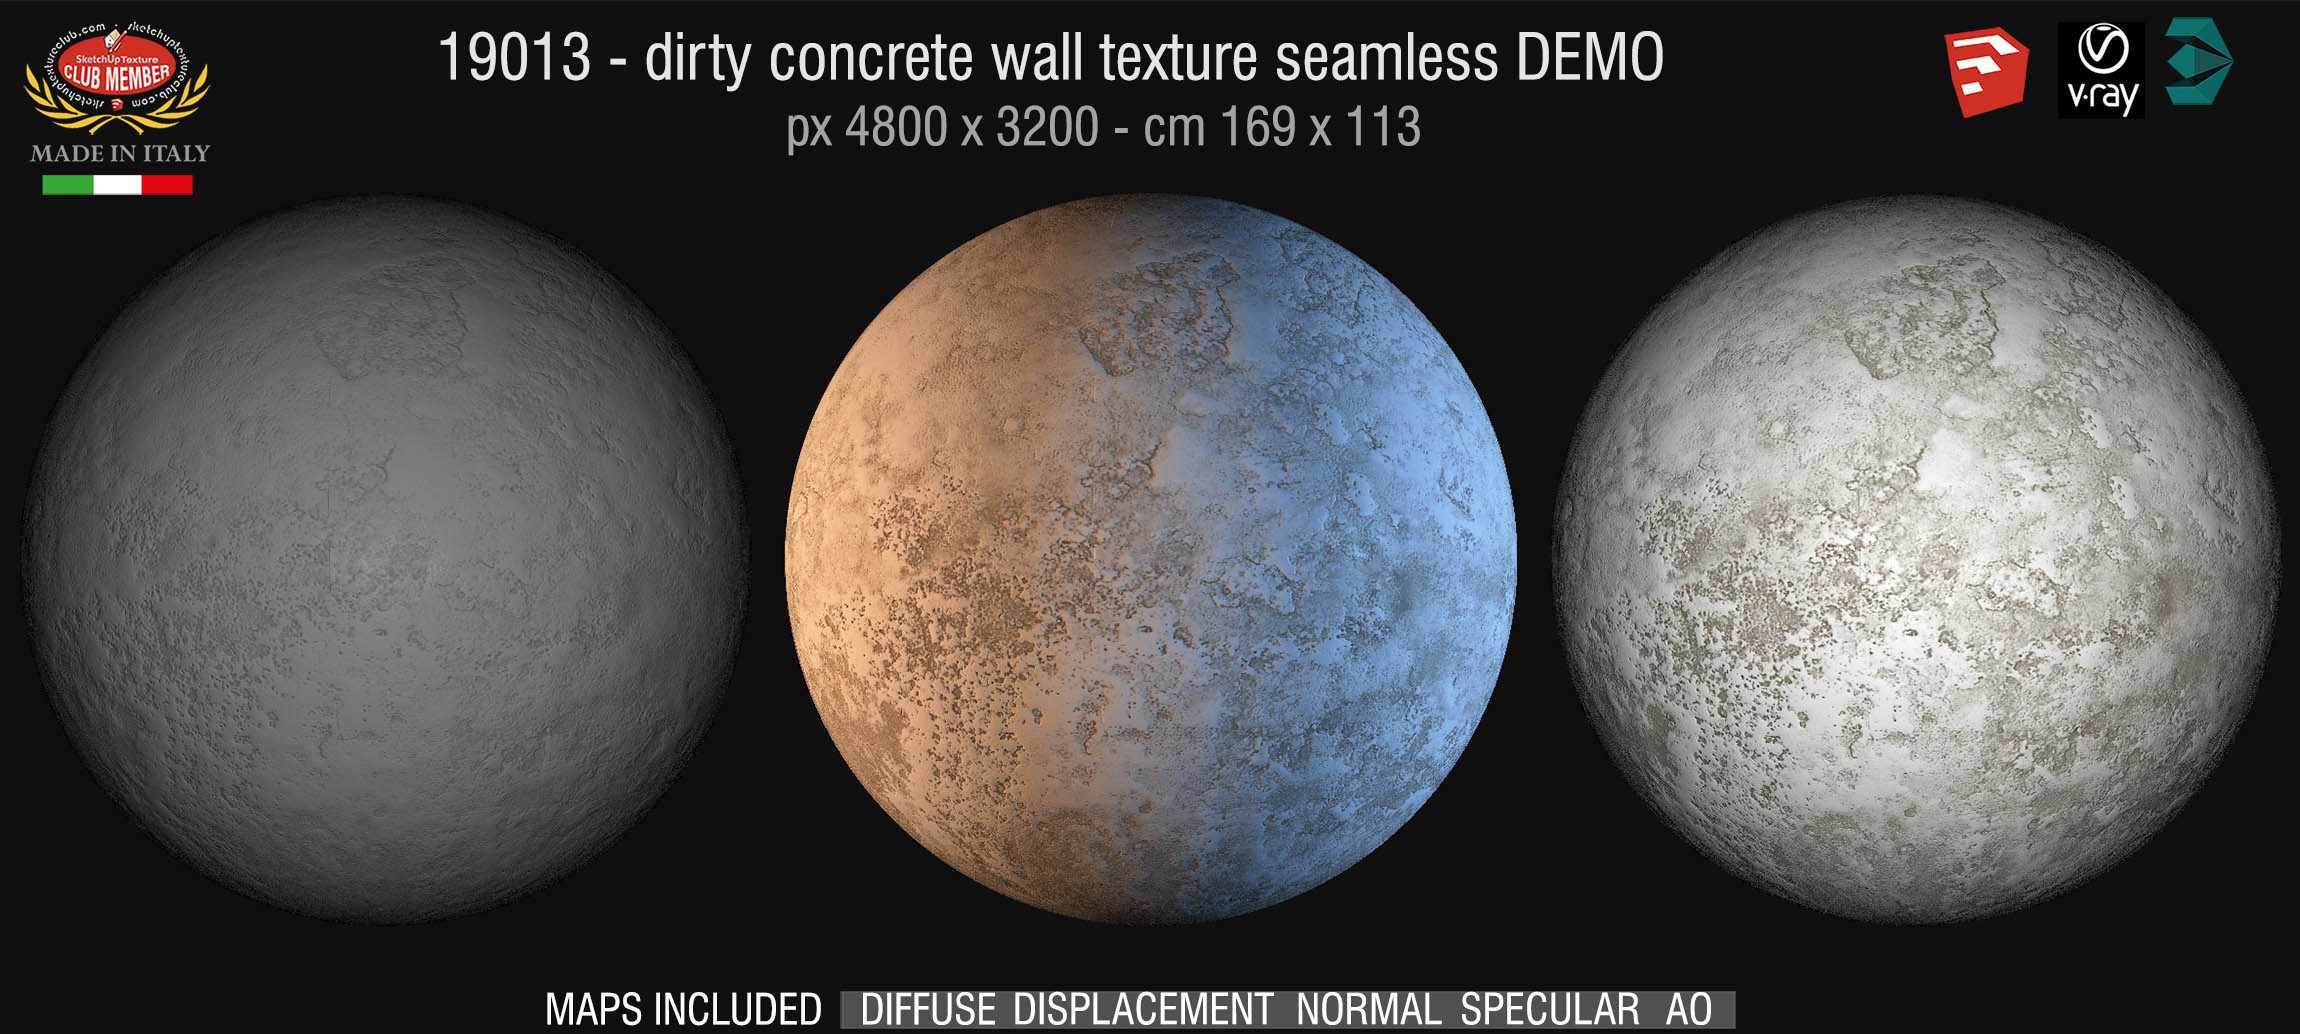 19013 HR Concrete dirty wall PBR texture seamless DEMO